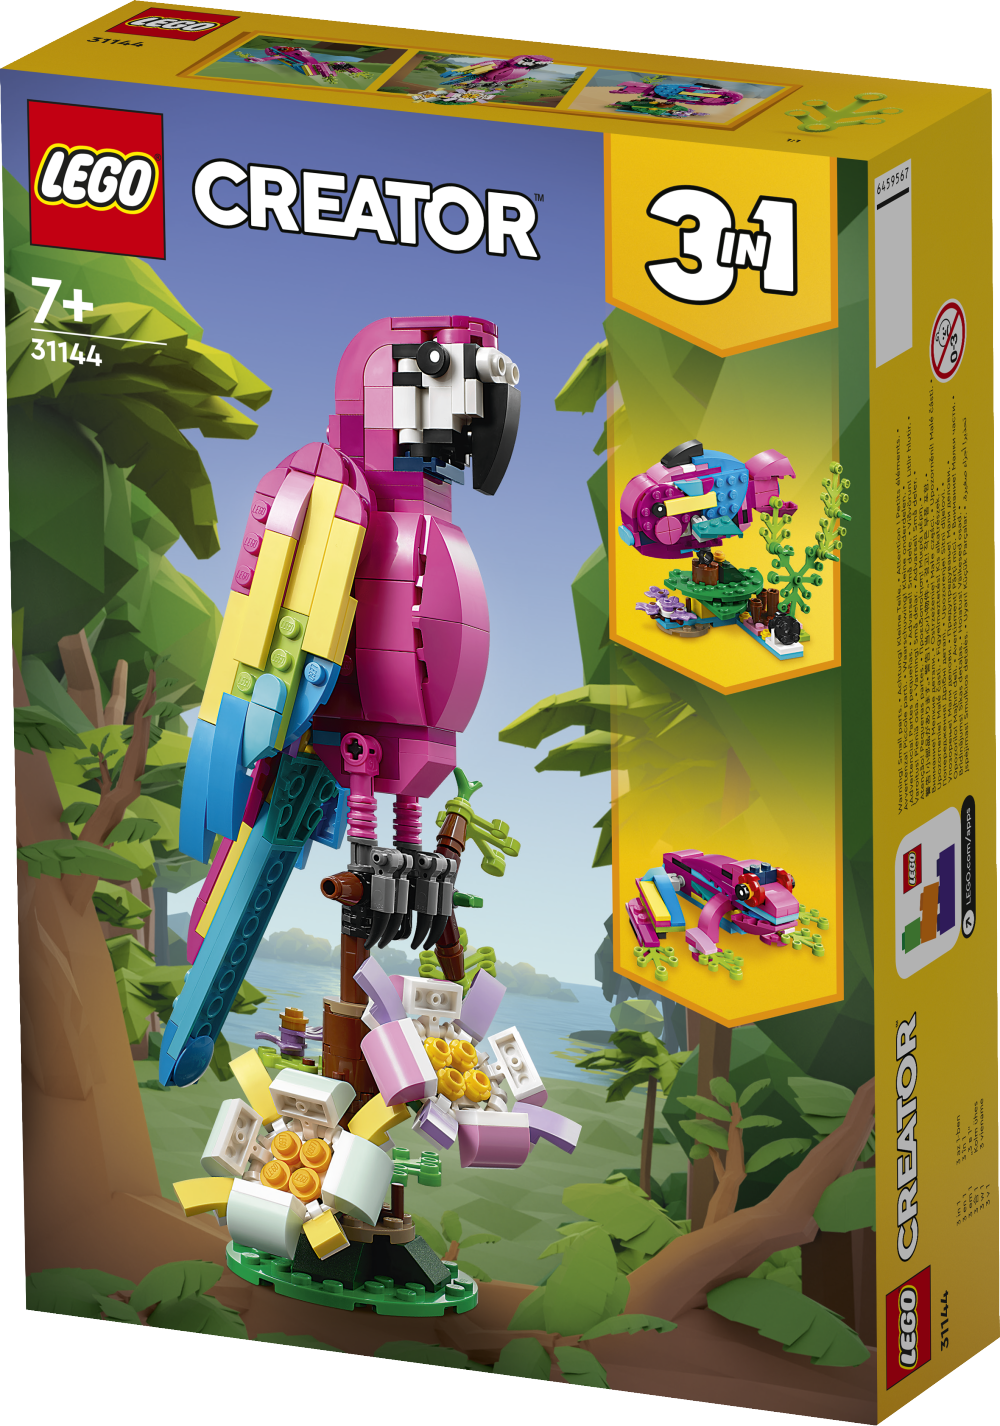 LEGO Creator - Exotischer pinkfarbener Papagei 7+